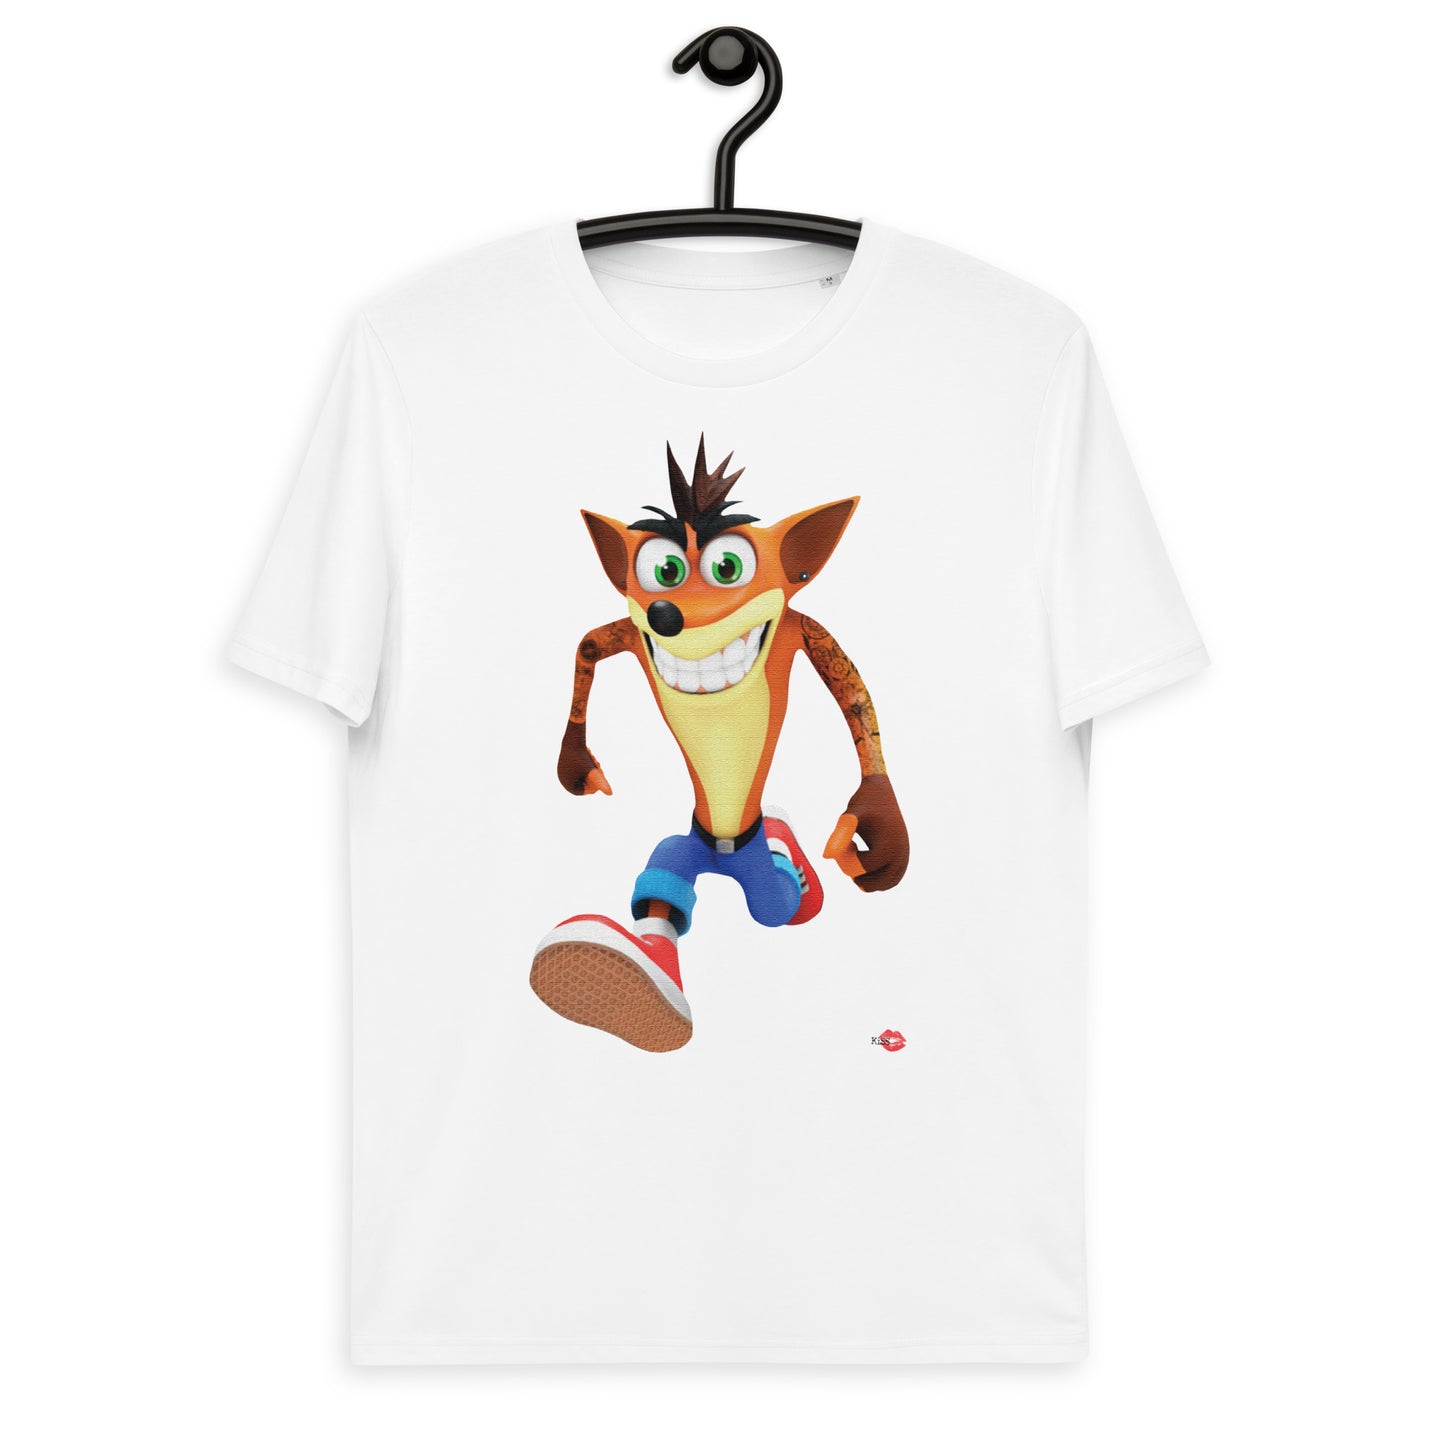 Crash Bandicoot KiSS Unisex organic cotton t-shirt - Gaming Retro gamer